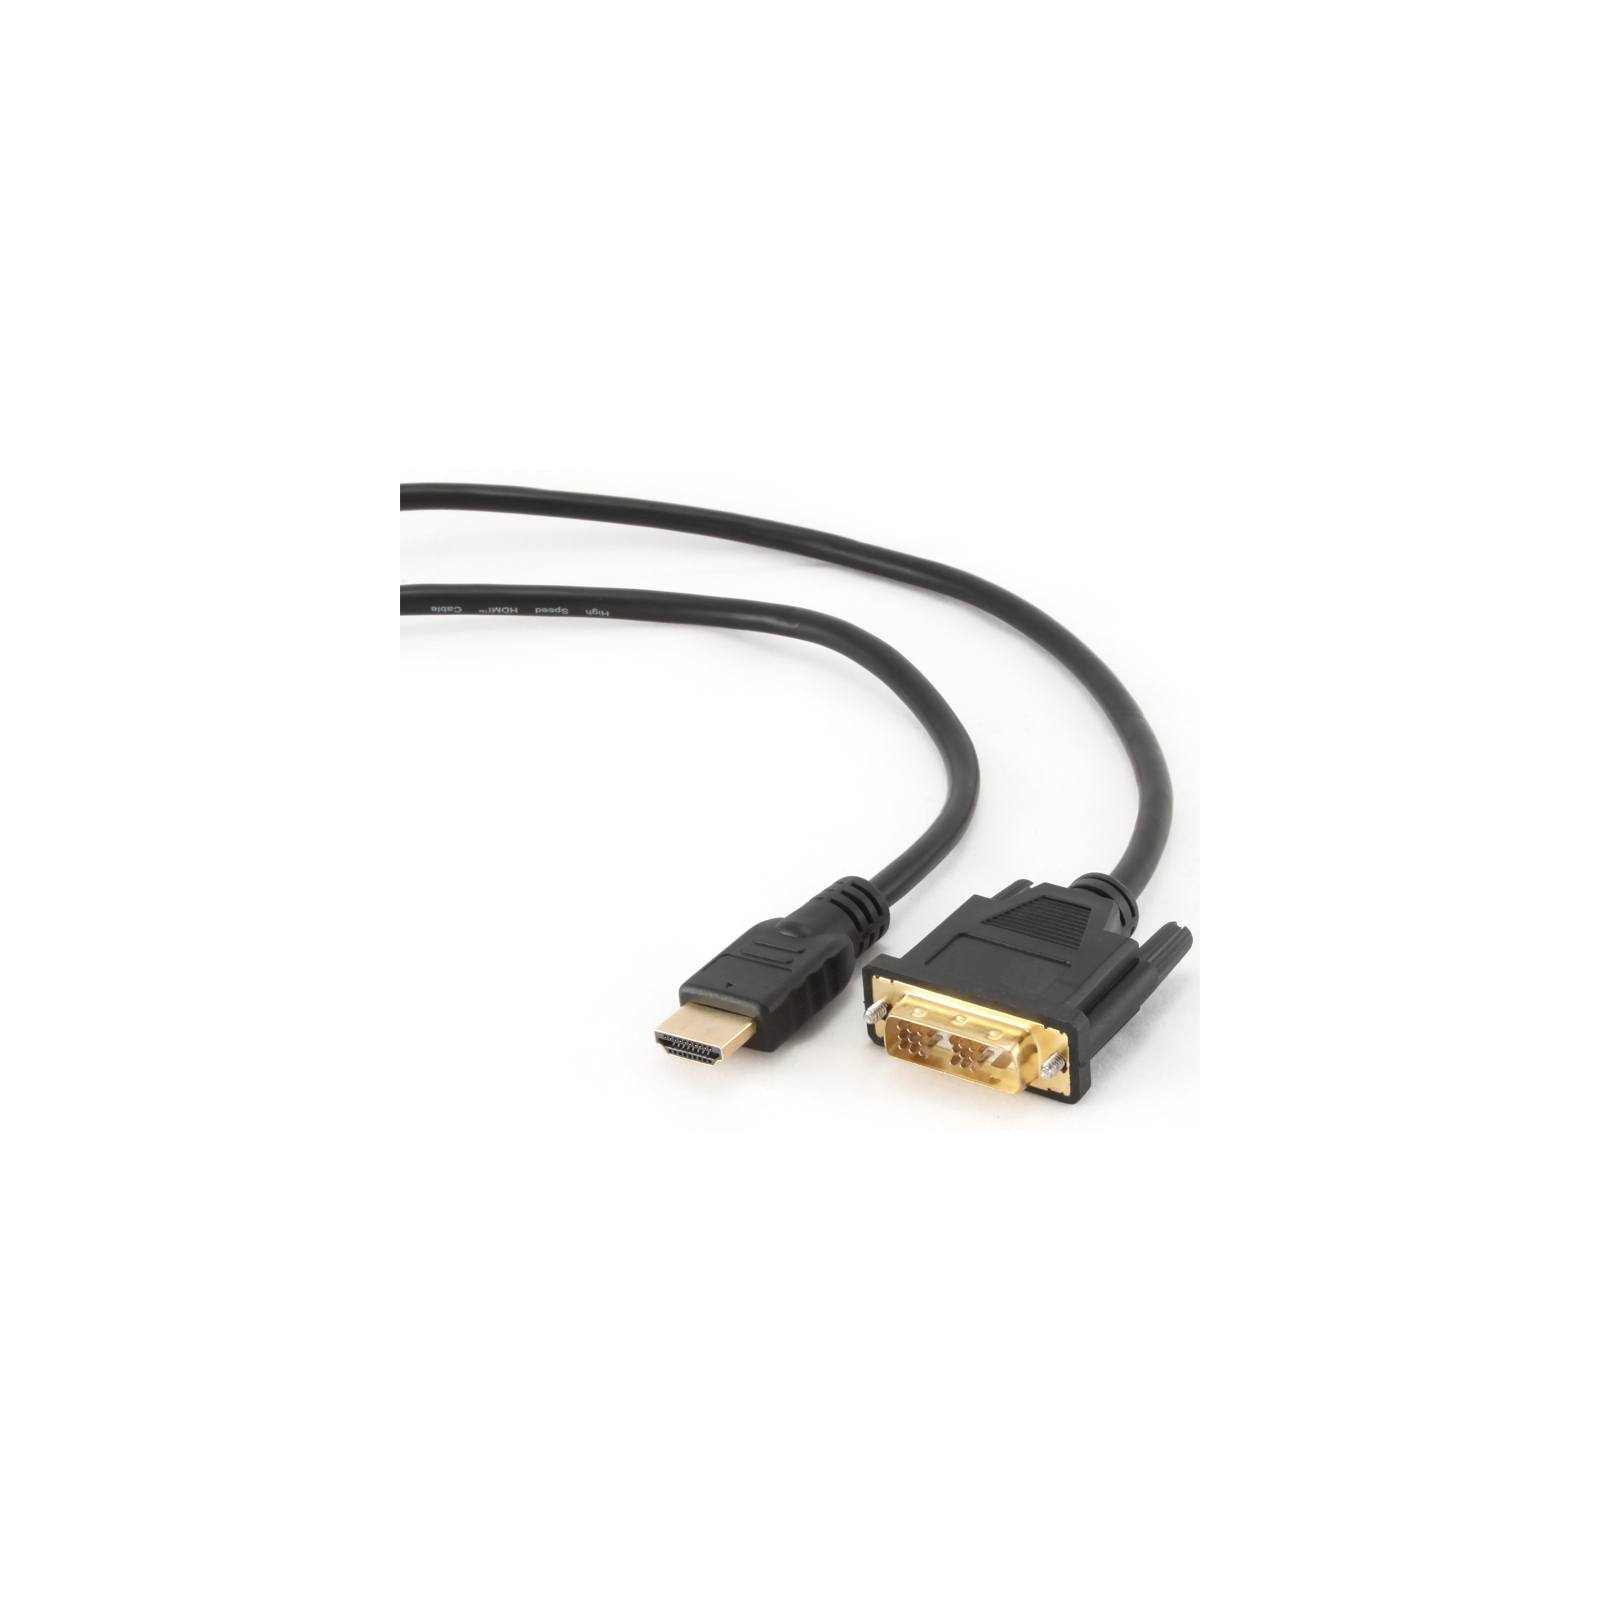 Кабель мультимедийный HDMI to DVI 18+1pin M, 4.5m Cablexpert (CC-HDMI-DVI-15)